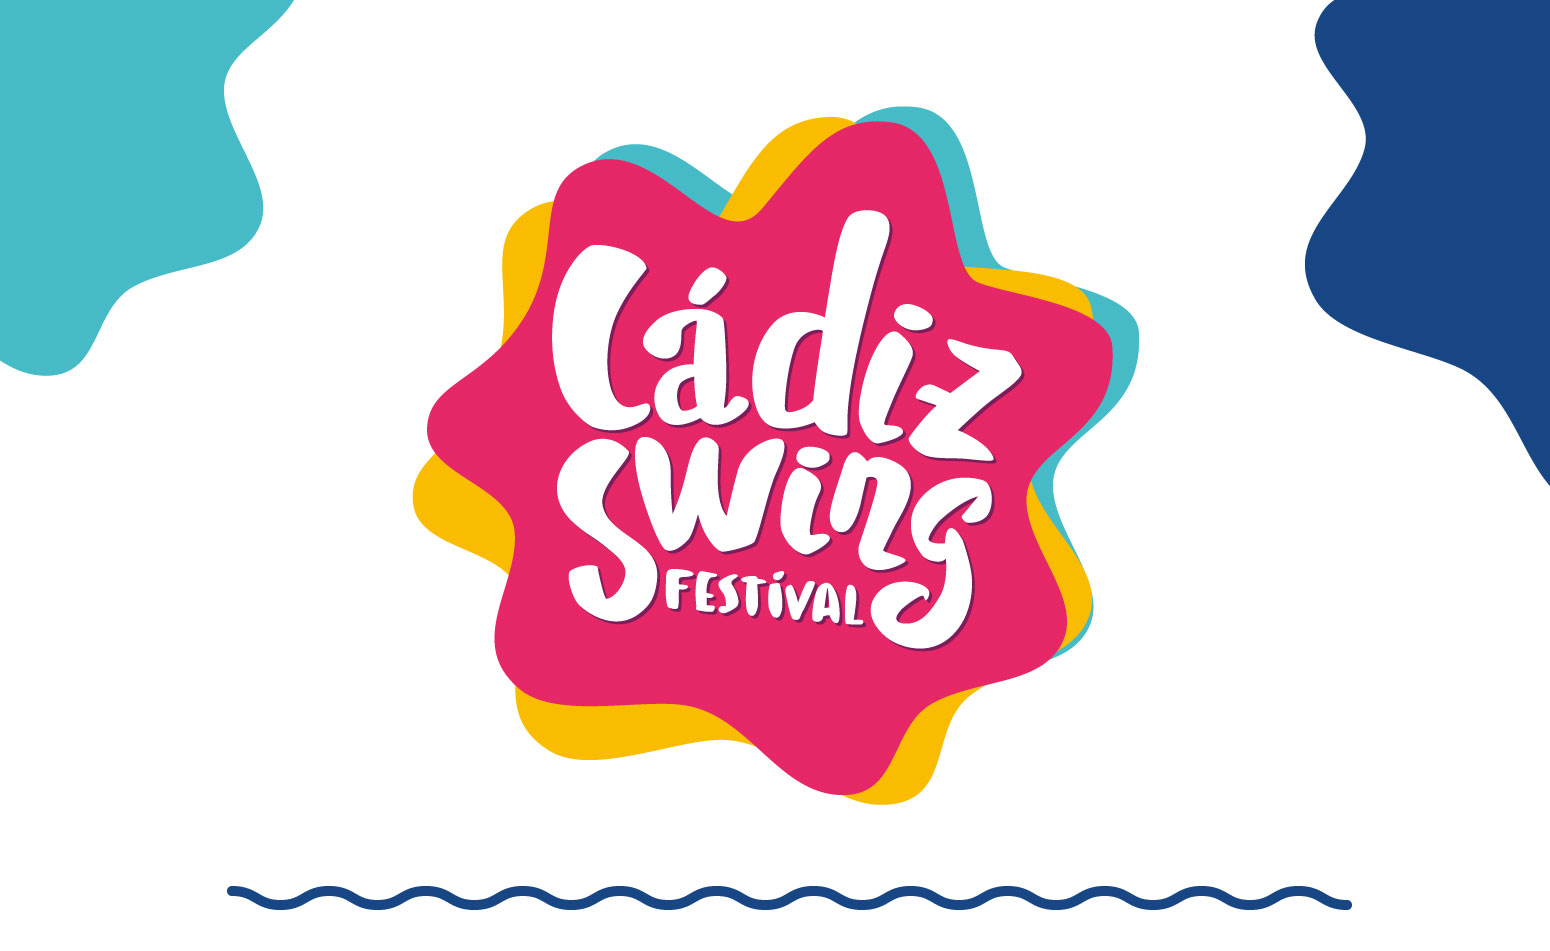 Cadiz Swing Festival